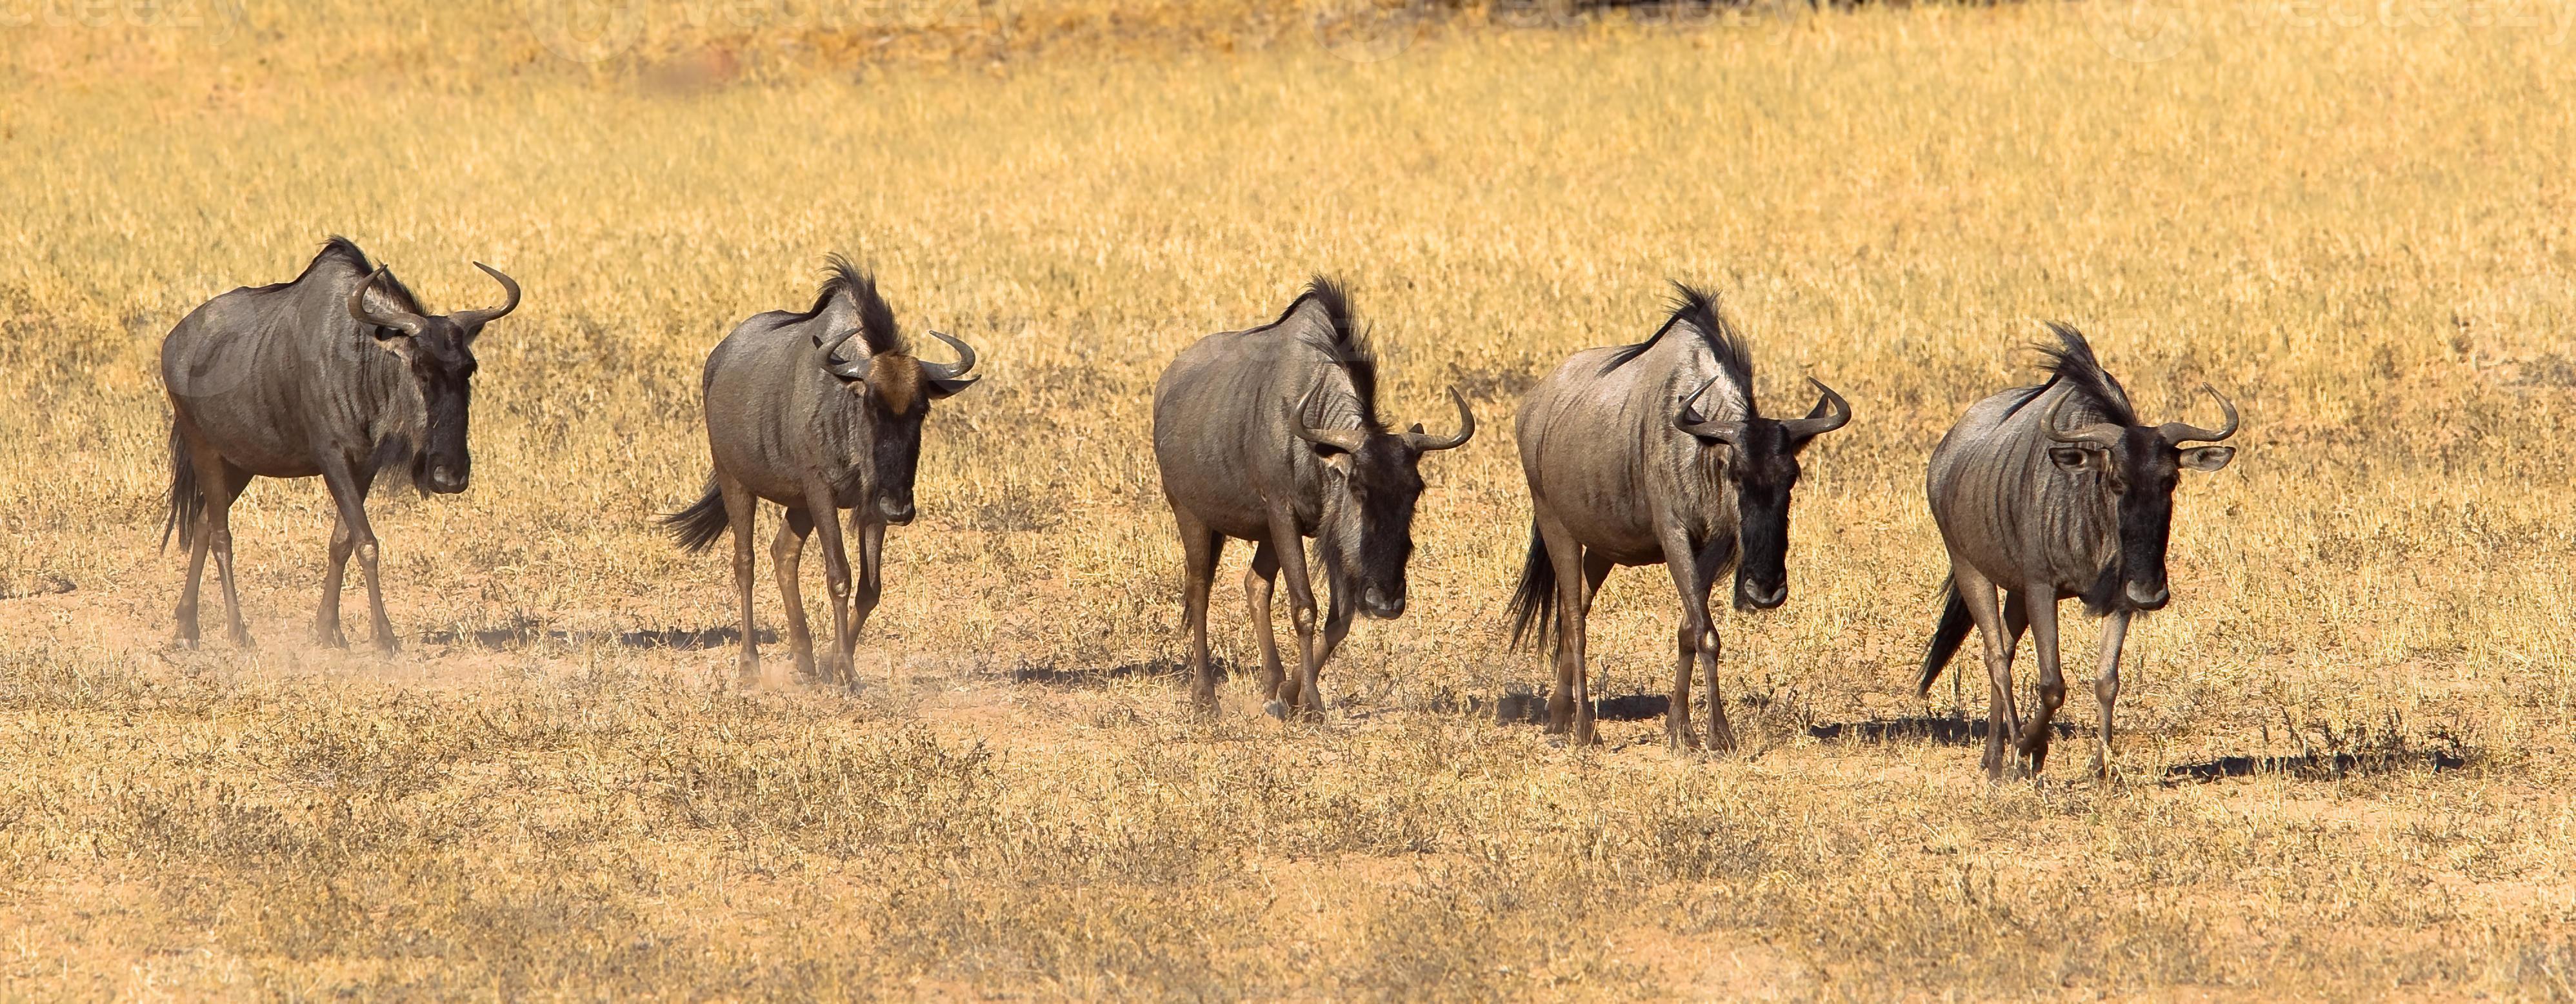 Wildebeest walking in line photo